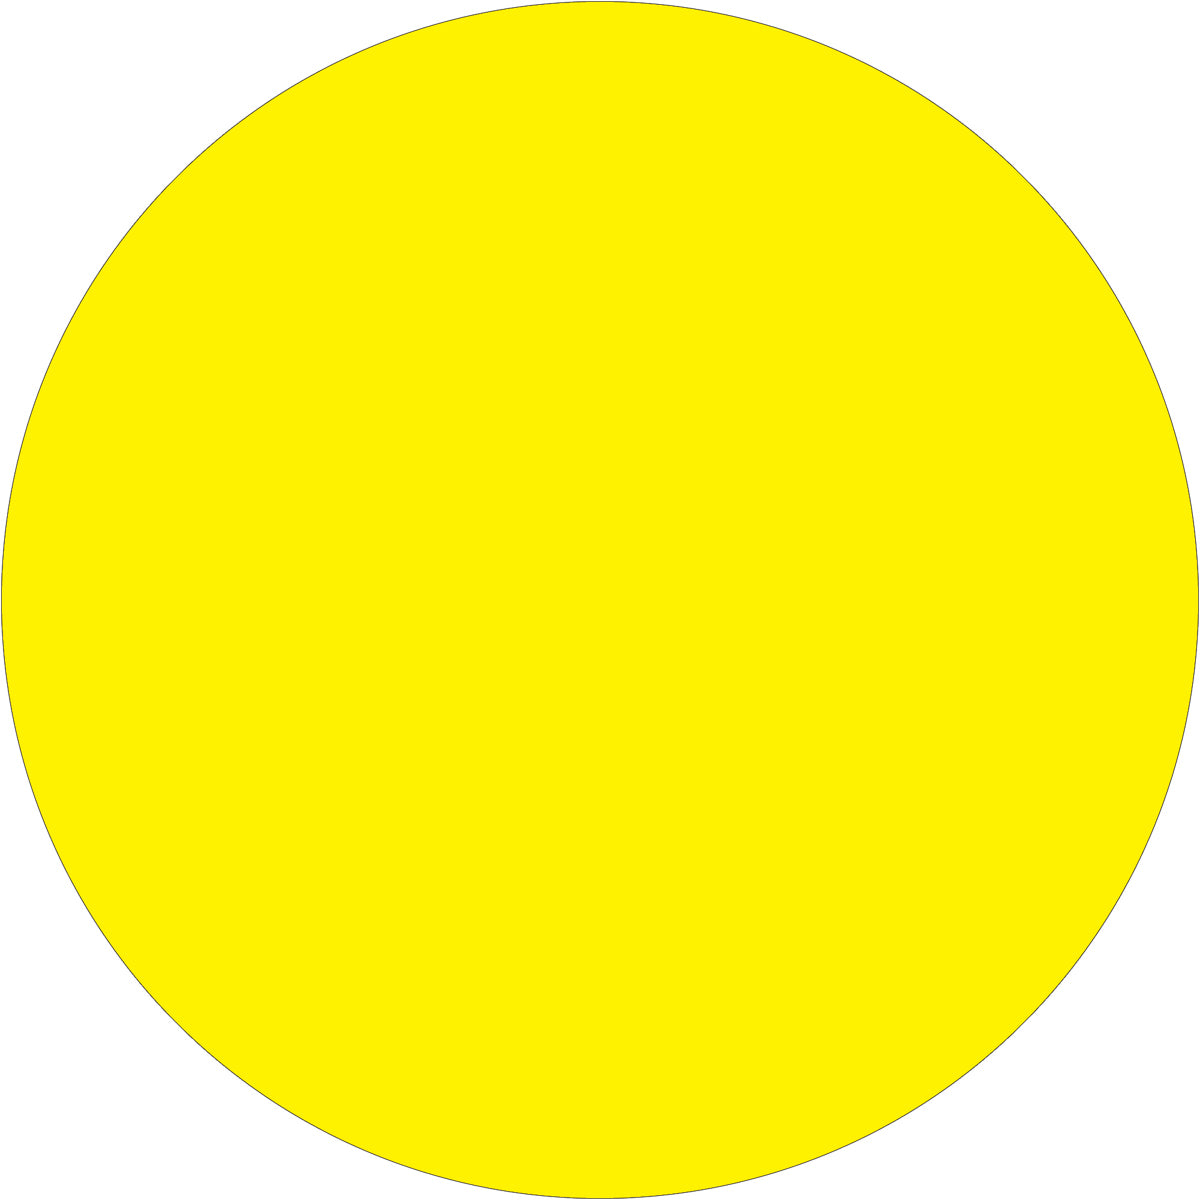 Цвет round. Желтые кружочки. Желтый кружок. Желтый круг на белом фоне. Желтый круг для карточек.